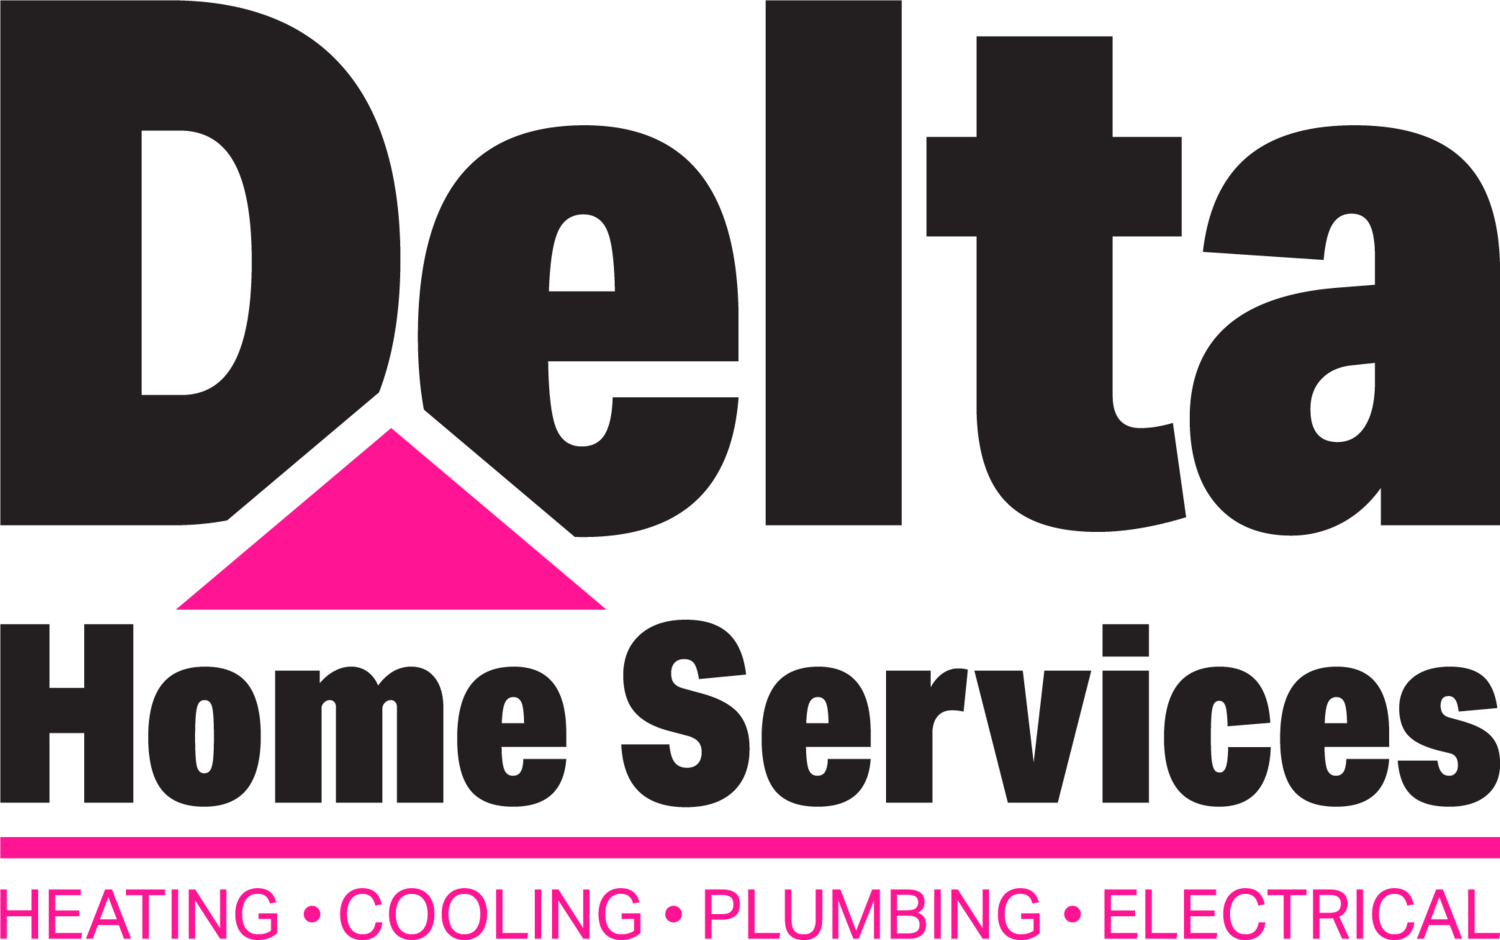 Delta Home Services